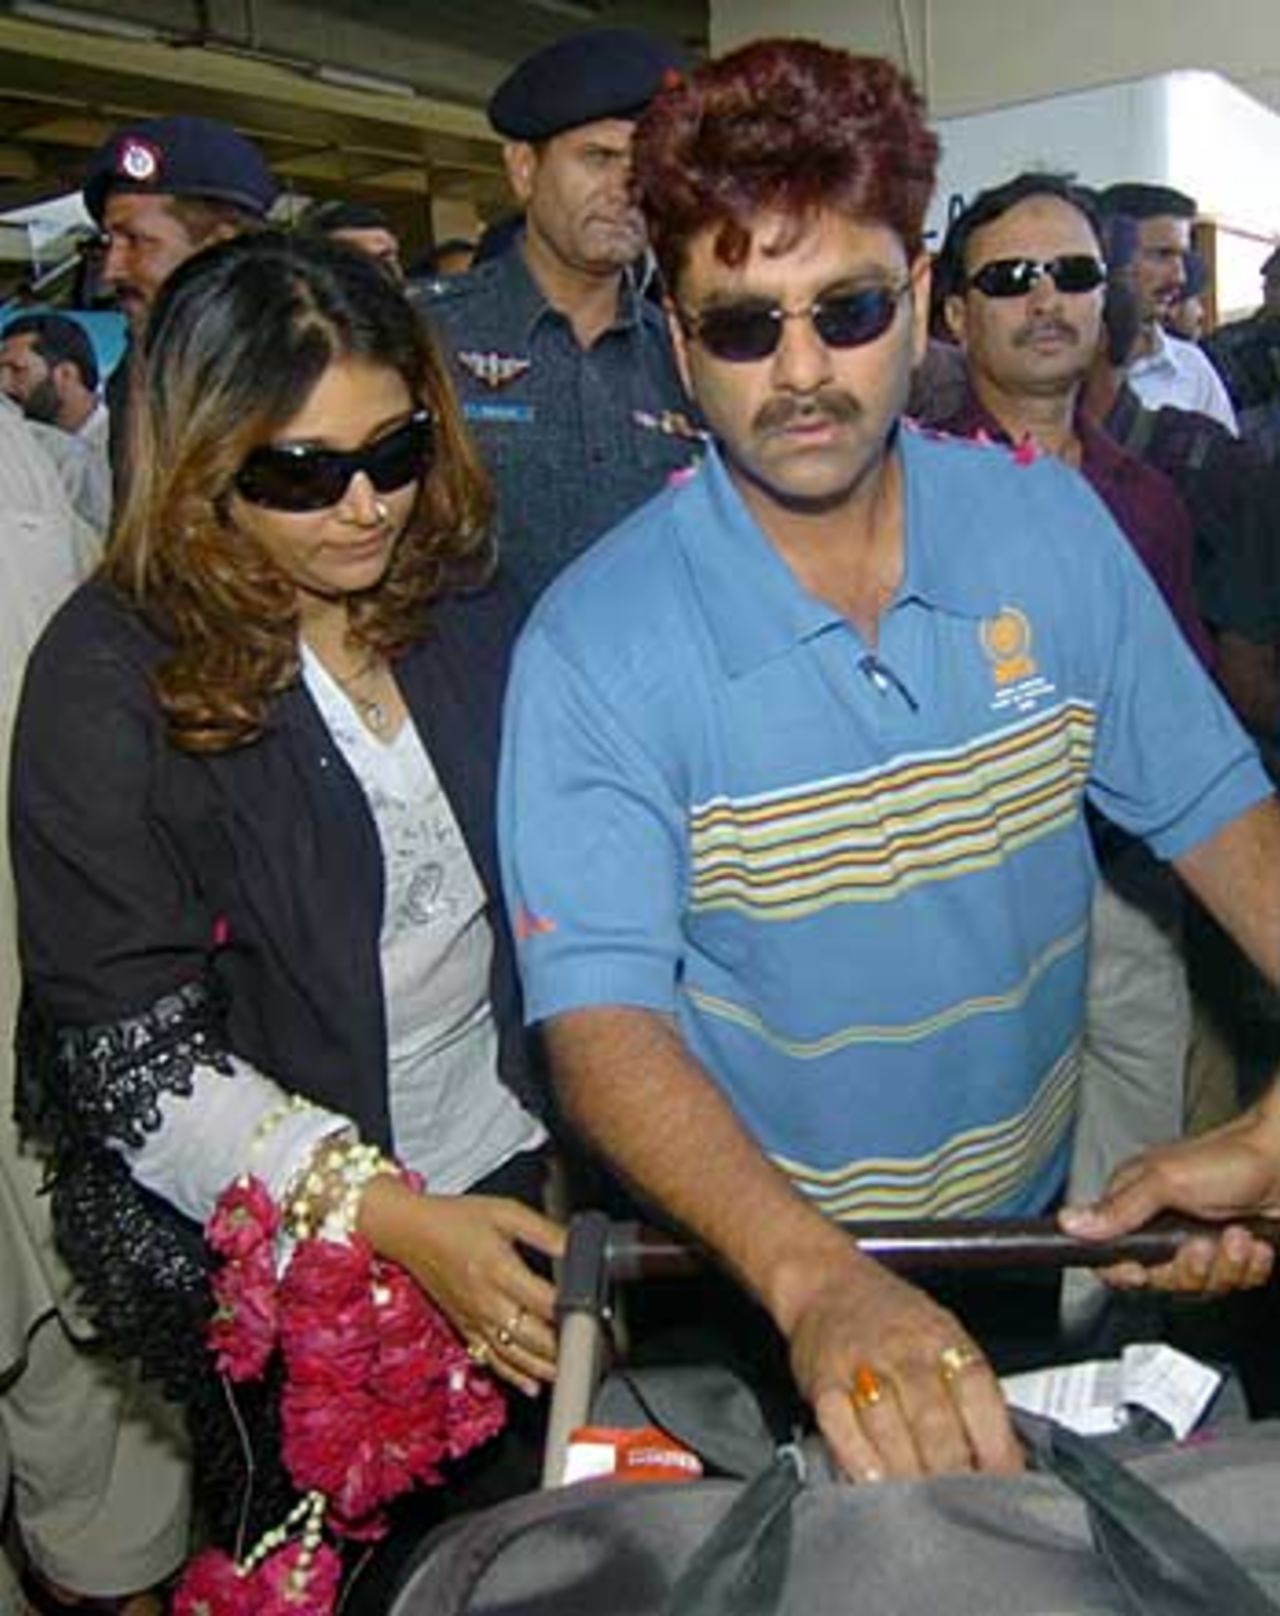 Manoj Prabhakar and his wife arrive in Karachi ahead of the India-Pakistan seniors match later this month, Karachi, April 22, 2006